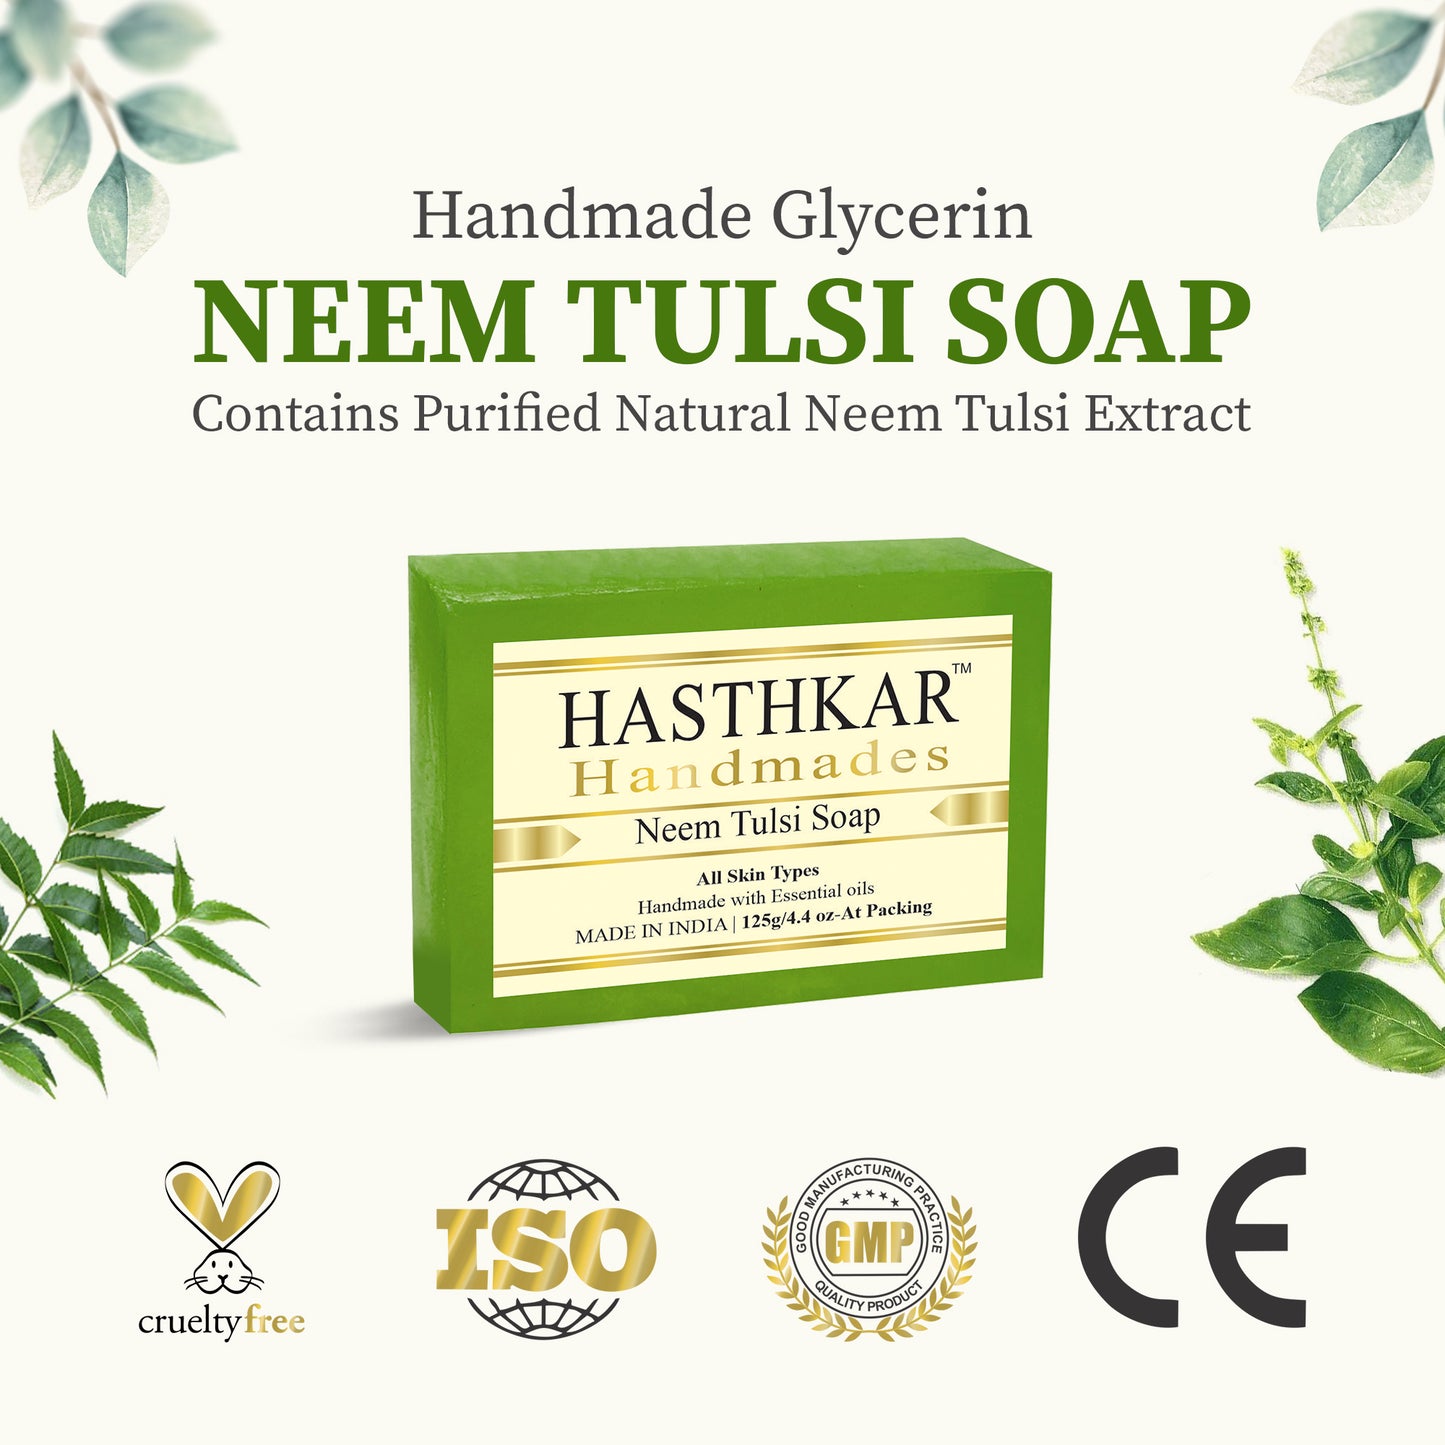 Hasthkar Handmades Glycerine Neem tulsi Soap 125gm Pack of 4